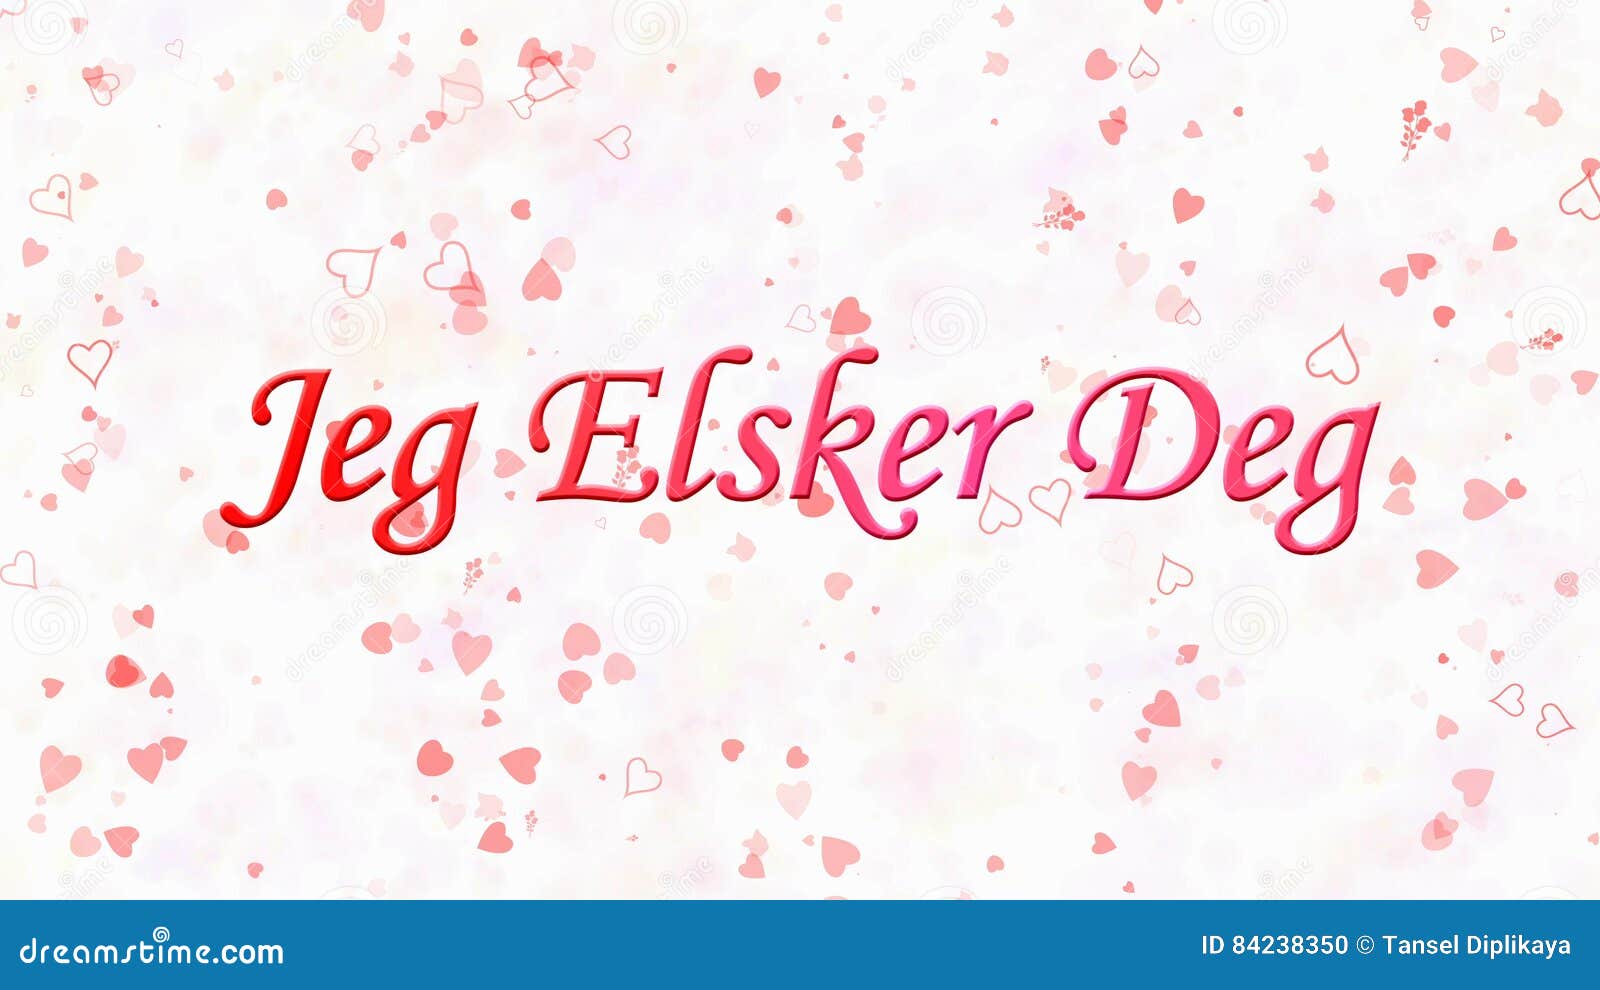 I Love You text in Norwegian Jeg Elsker Deg on white background with hearts...